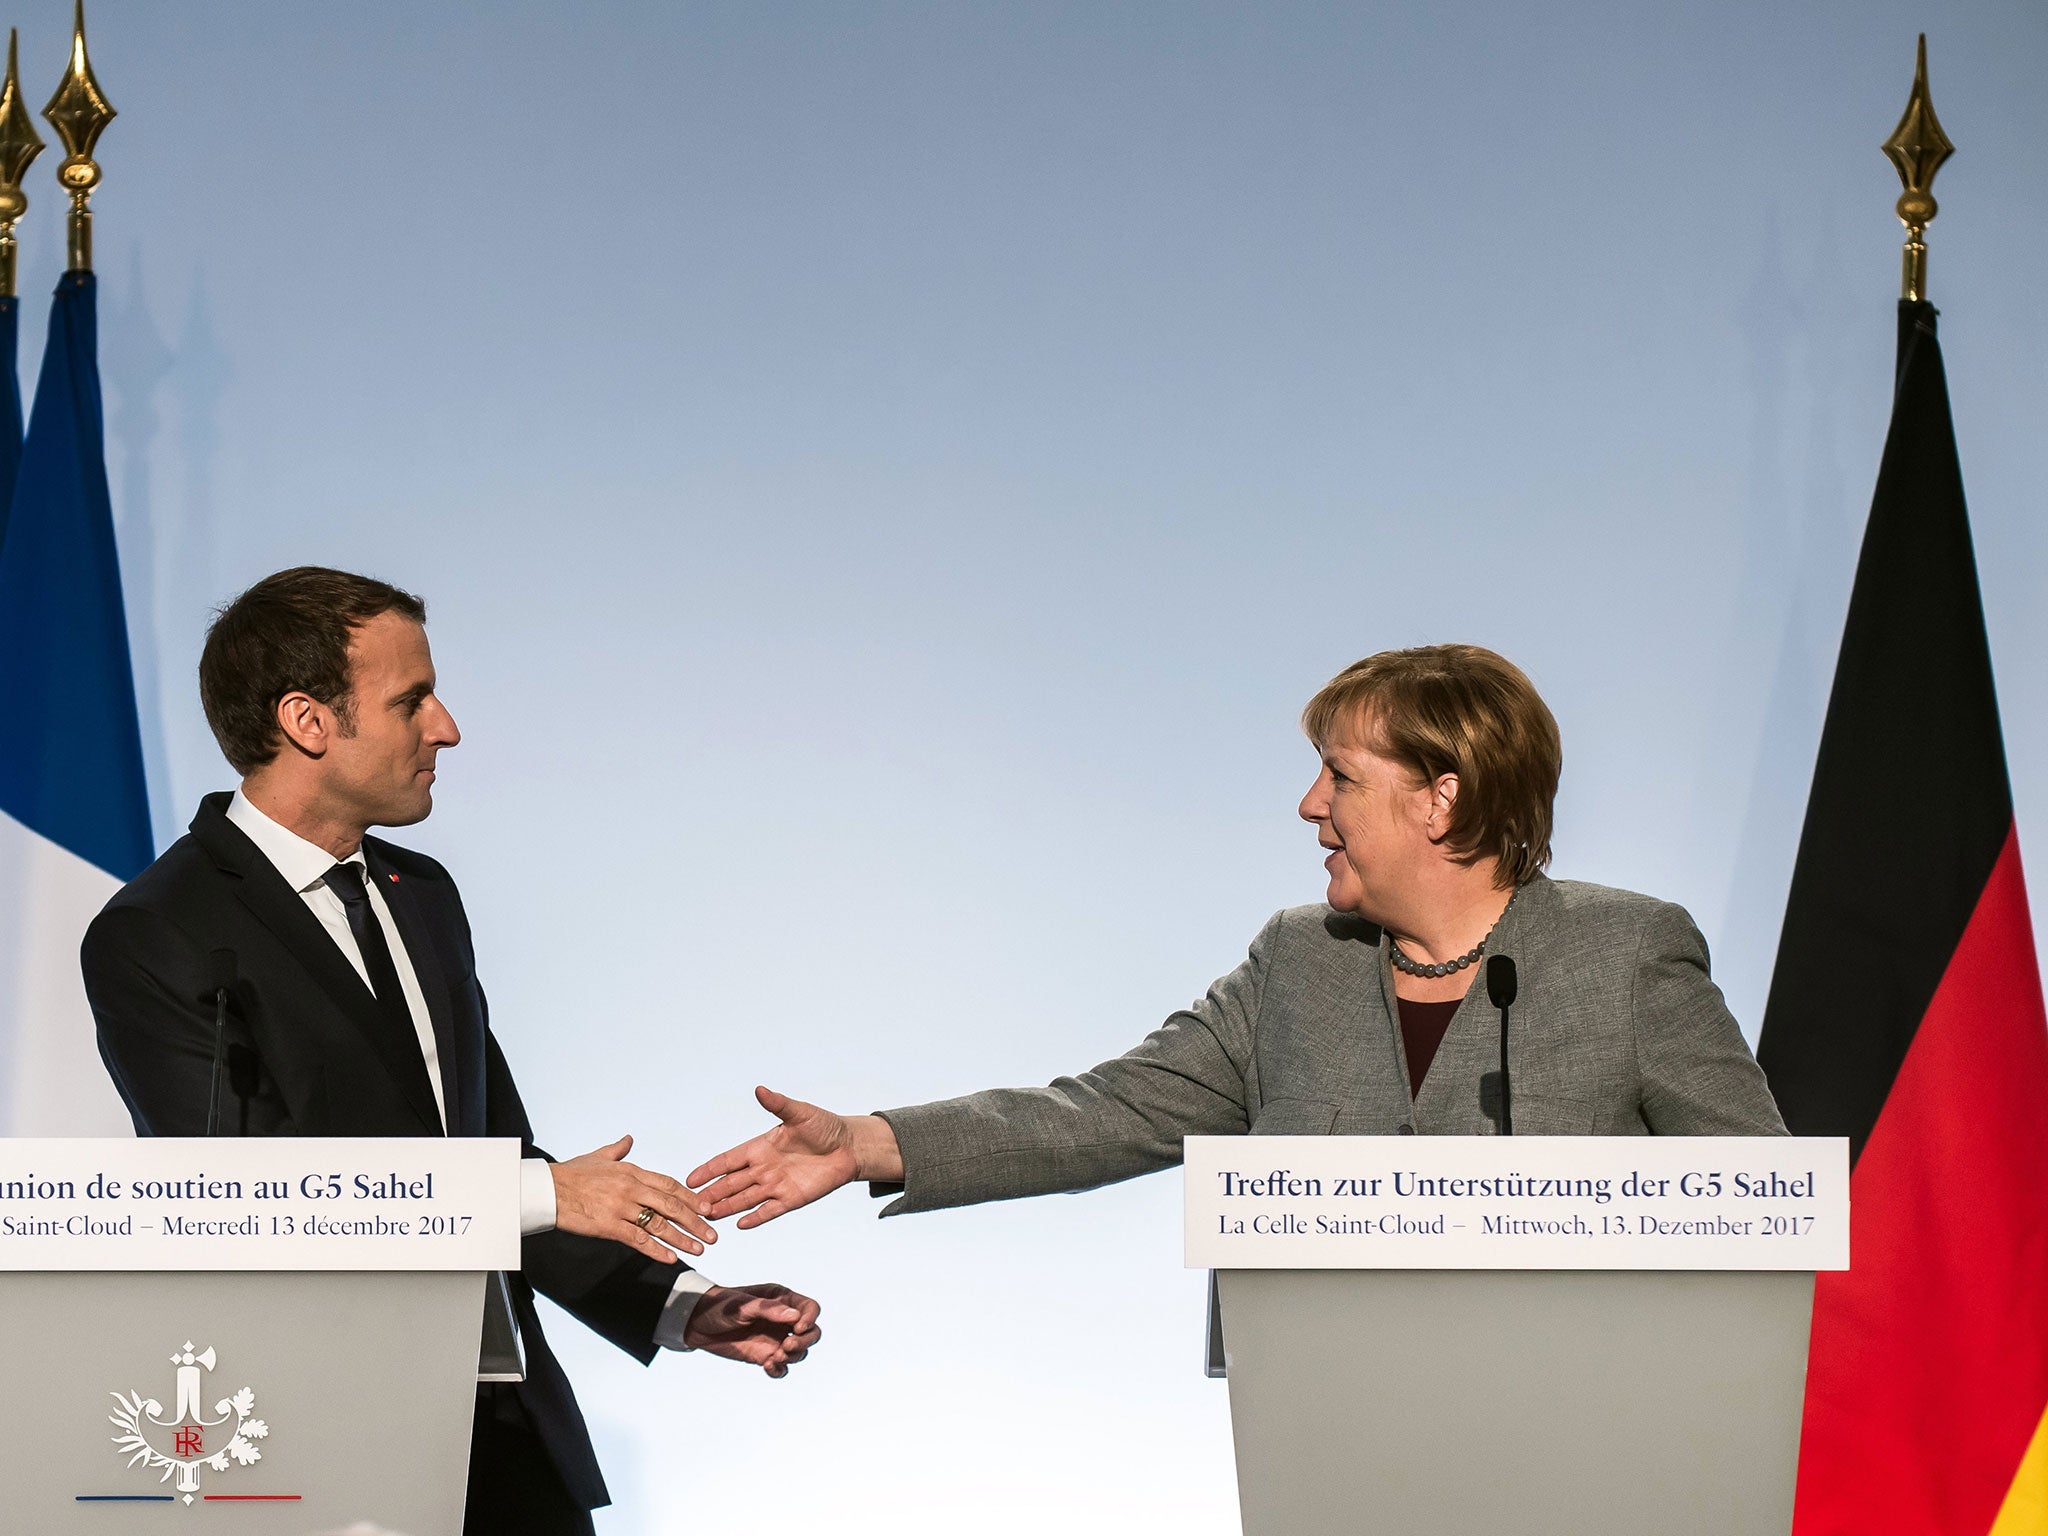 President Emmanuel Macron (L) and German Chancellor Angela Merkel (R) shake hands during a media conference